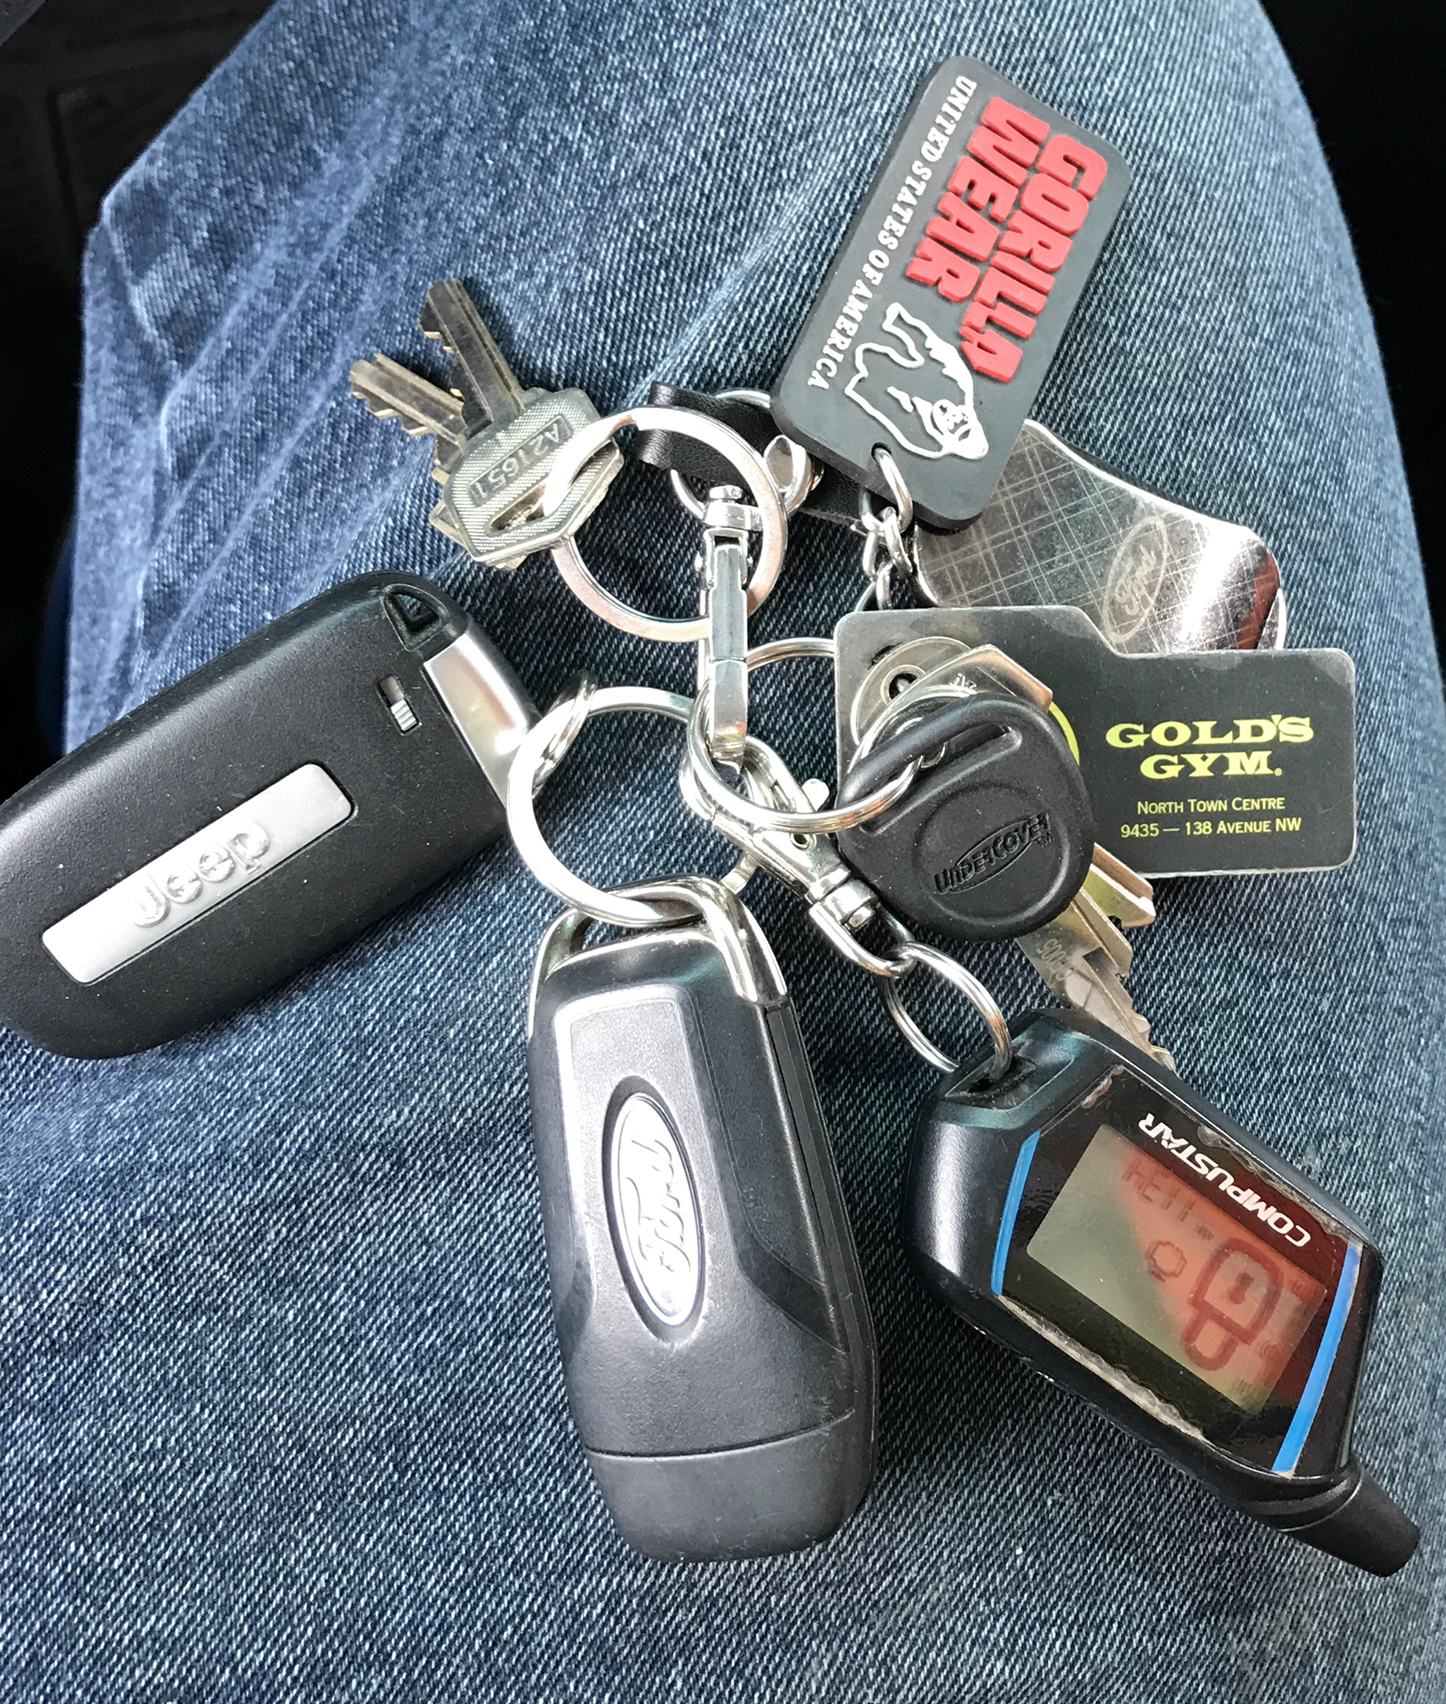 1pcs Blue Color USA Ship New Quick Release Neck Strap Lanyard Keychain Keyring Car Keys House Keys ID Badges Card For Chevrolet Design Coloryard 5559031890 